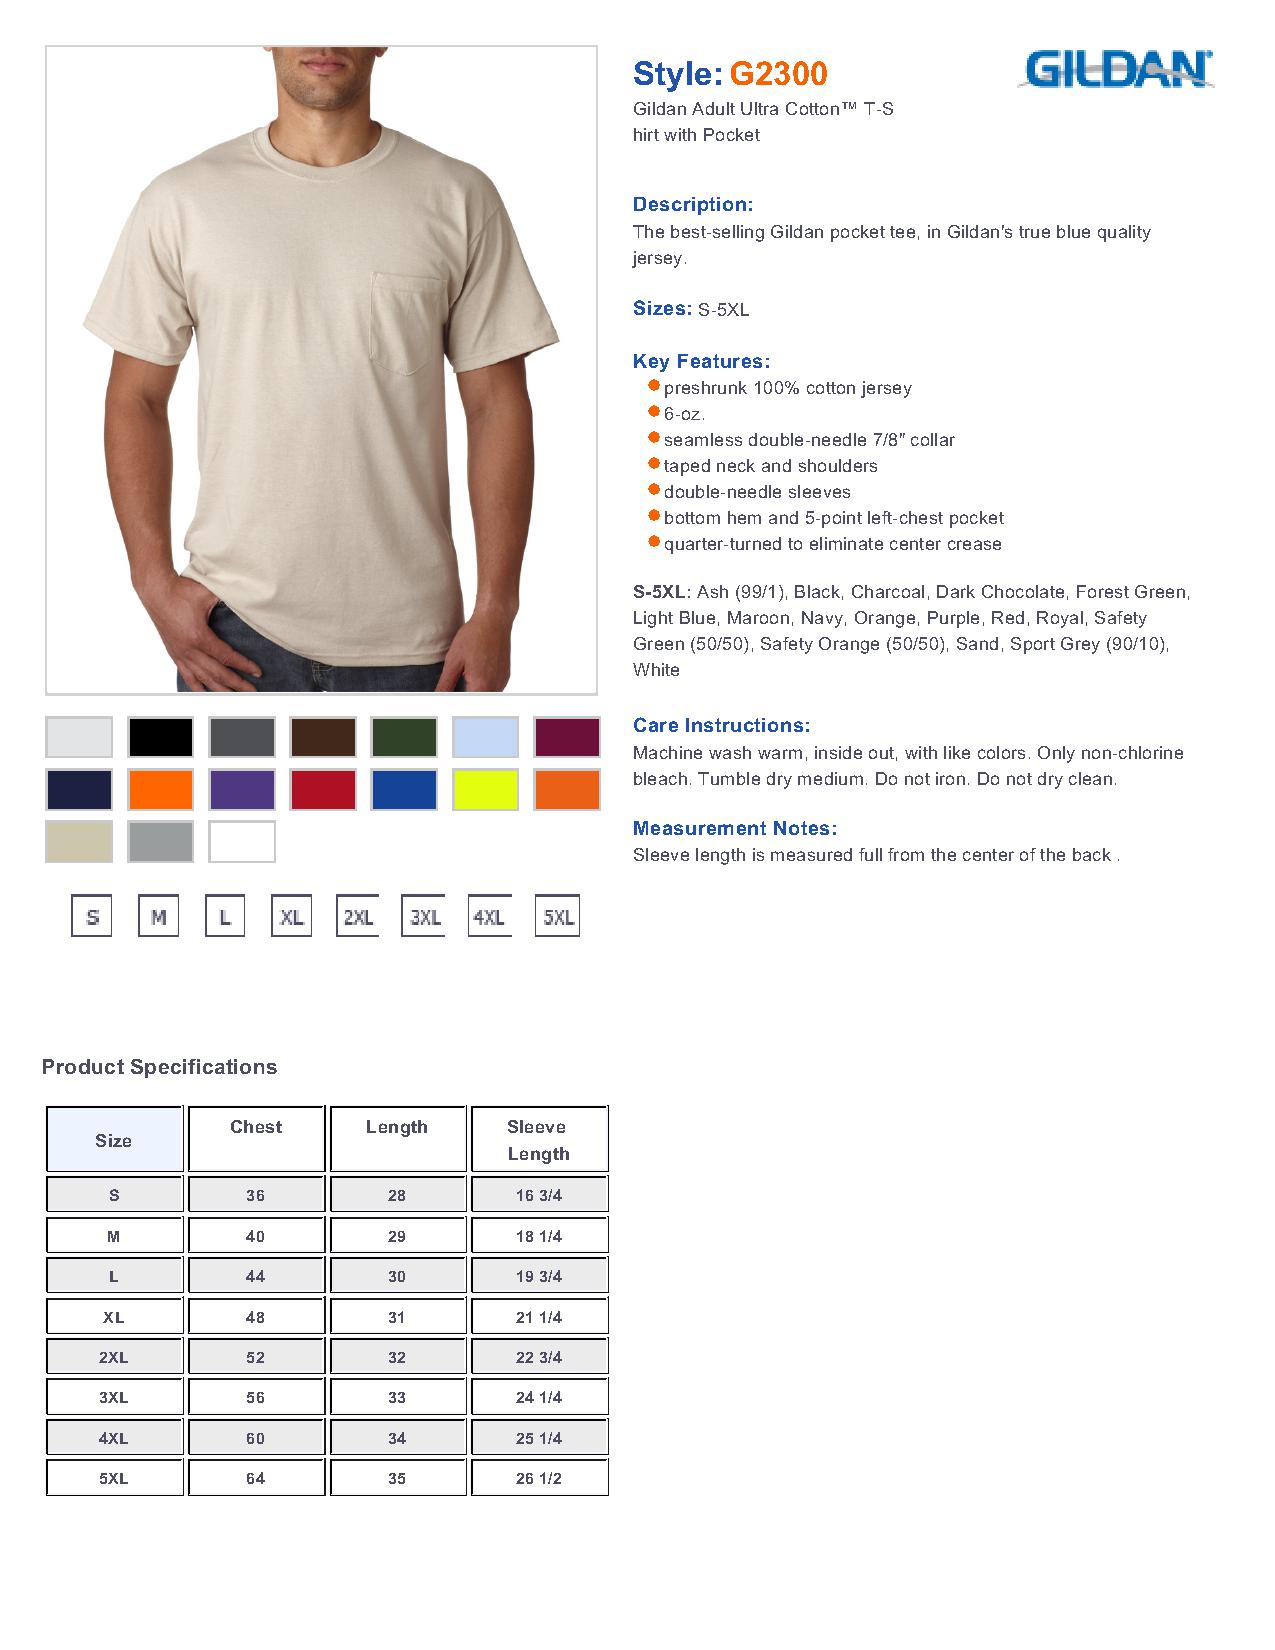 Gildan G2300 - Adult Ultra Cotton $6.08 - Men's T-Shirts